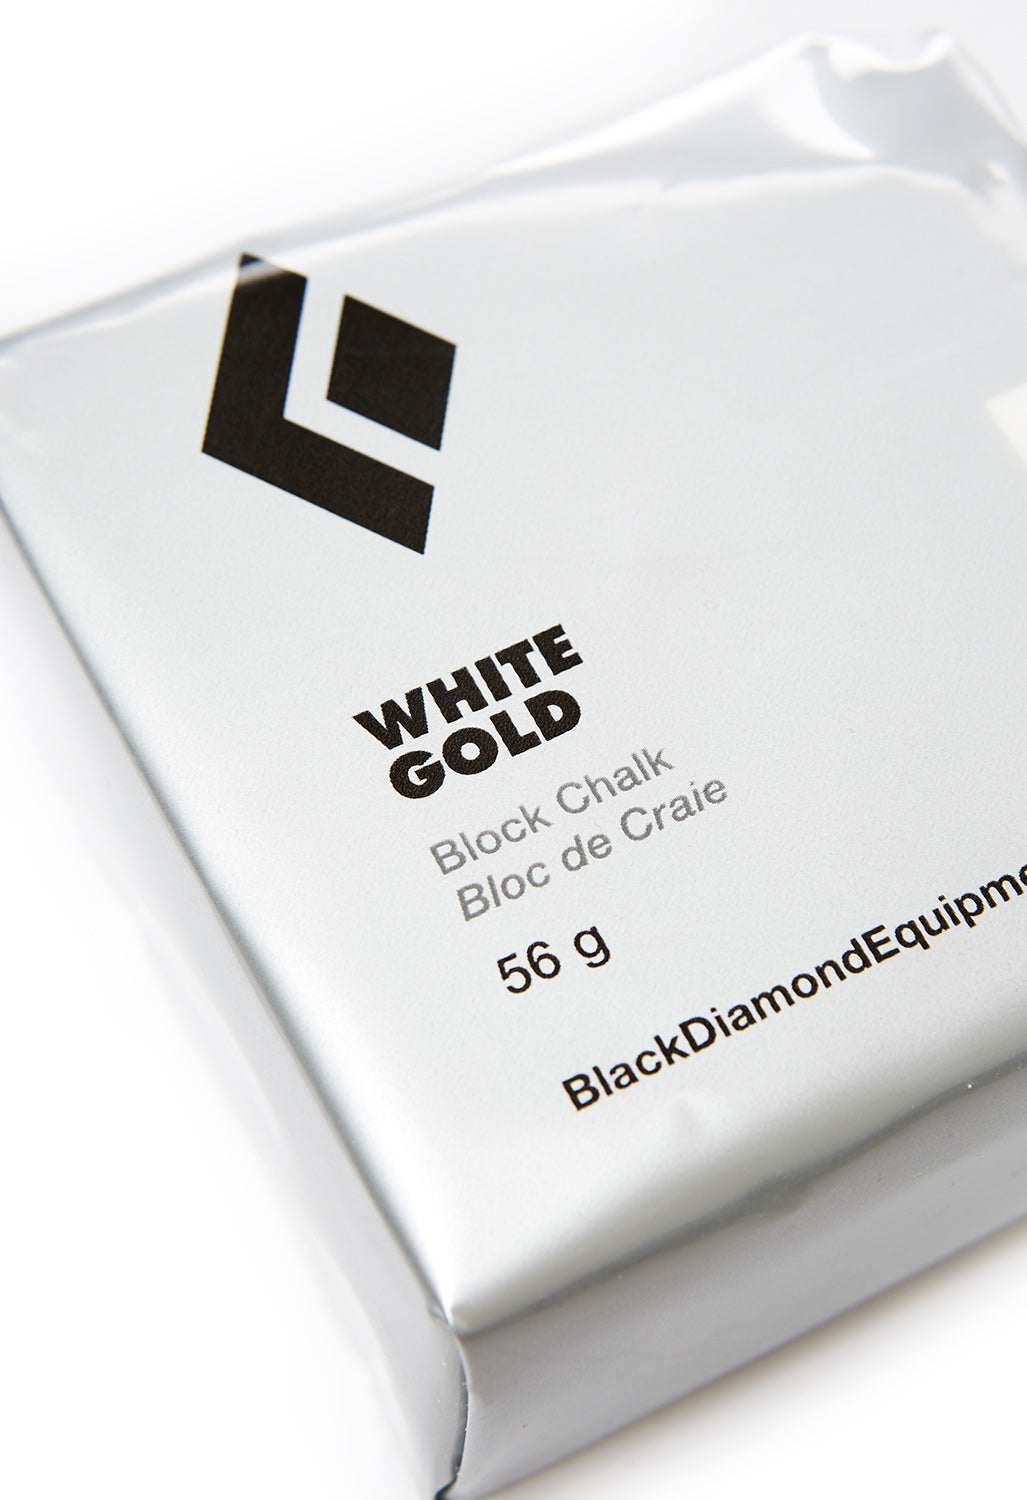 Black Diamond White Gold 56g Chalk Block